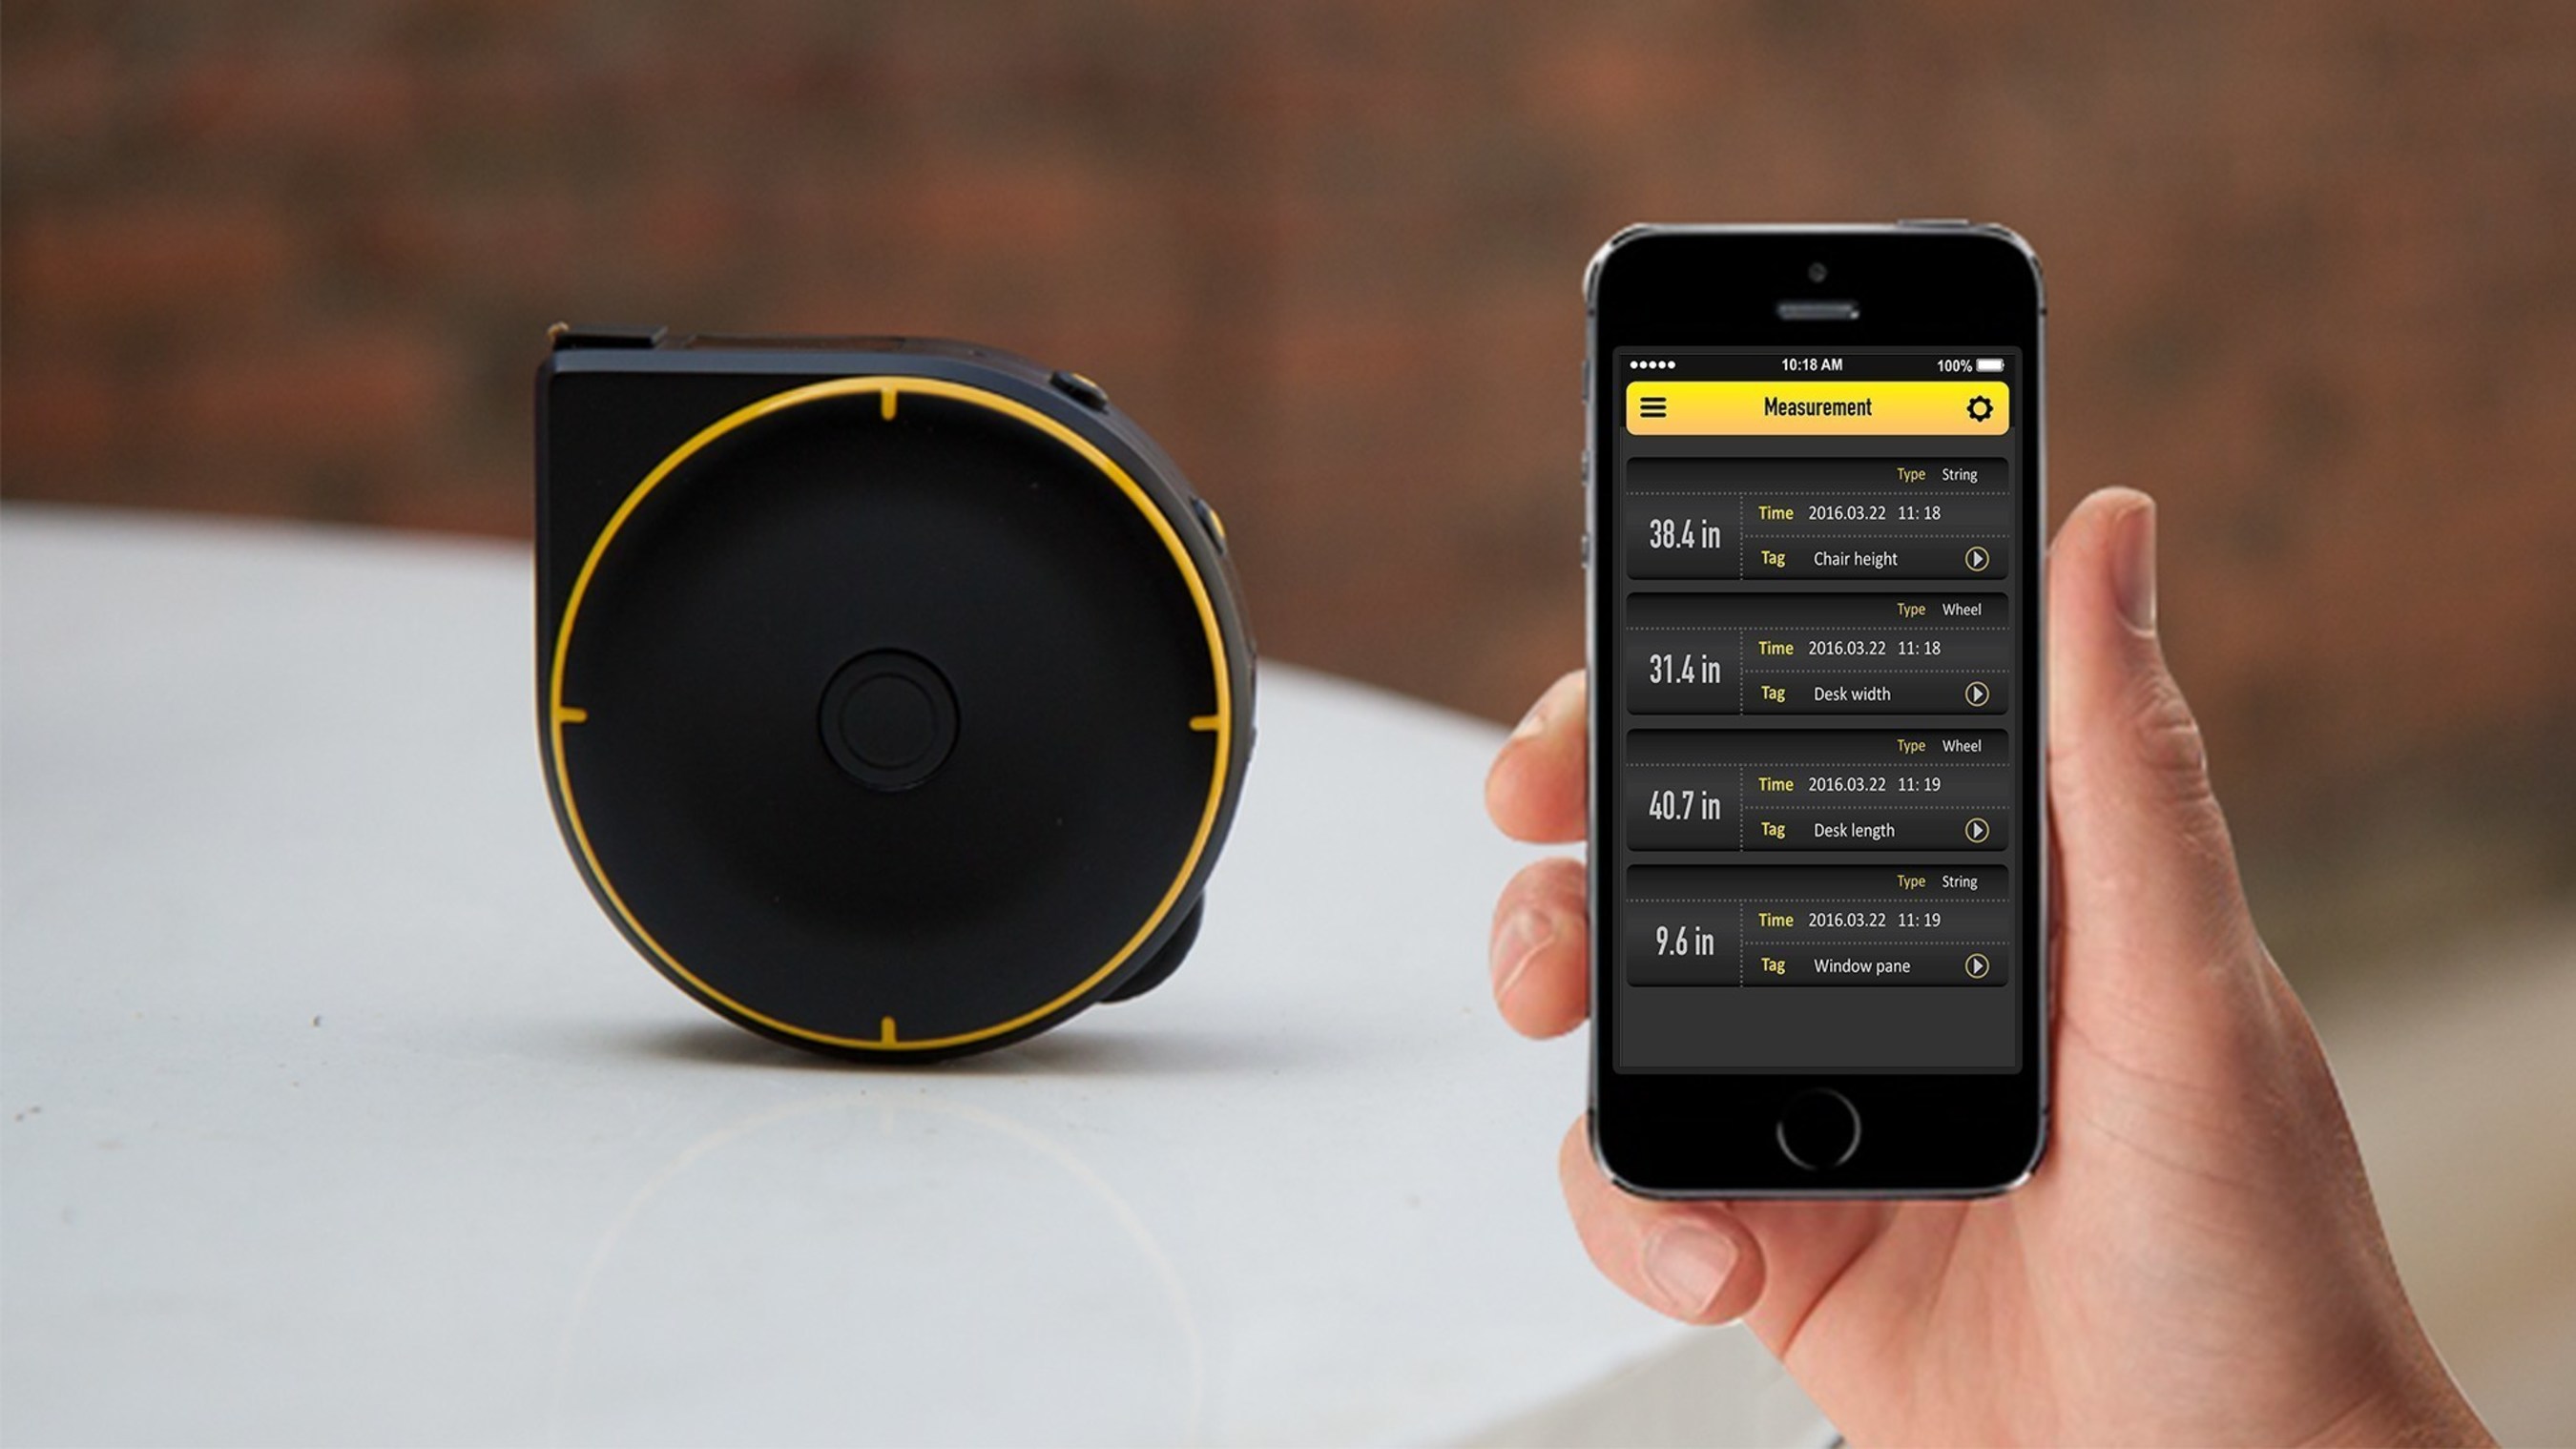 Bagel: The World's Smartest Tape Measure by Bagel Labs, Inc. — Kickstarter